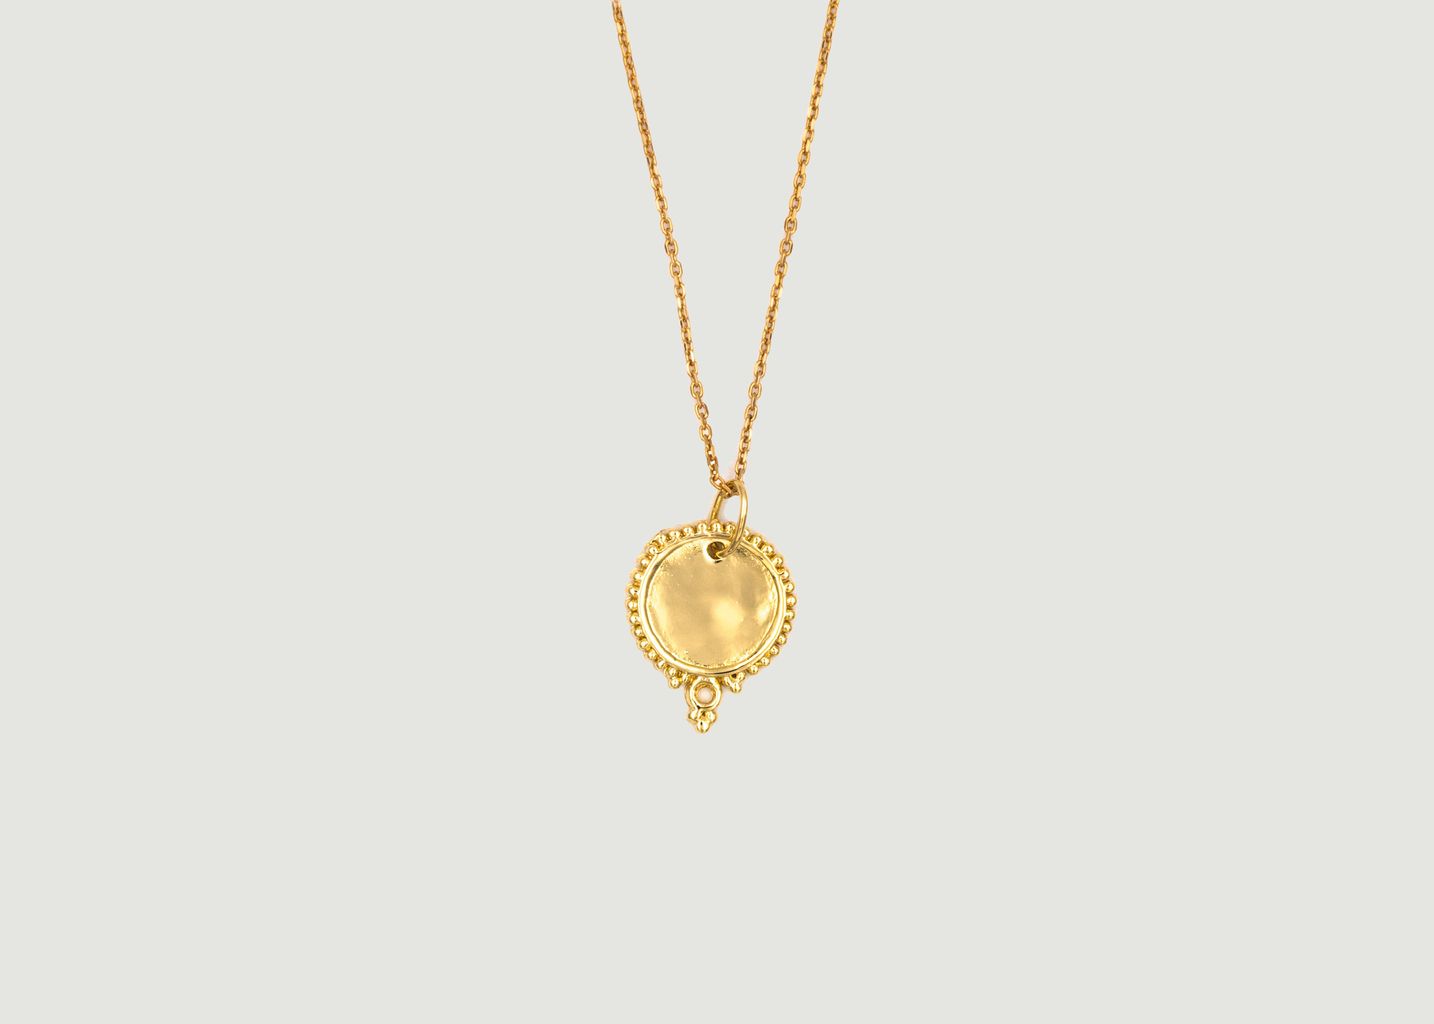 Apolline necklace with pendant - Luj Paris